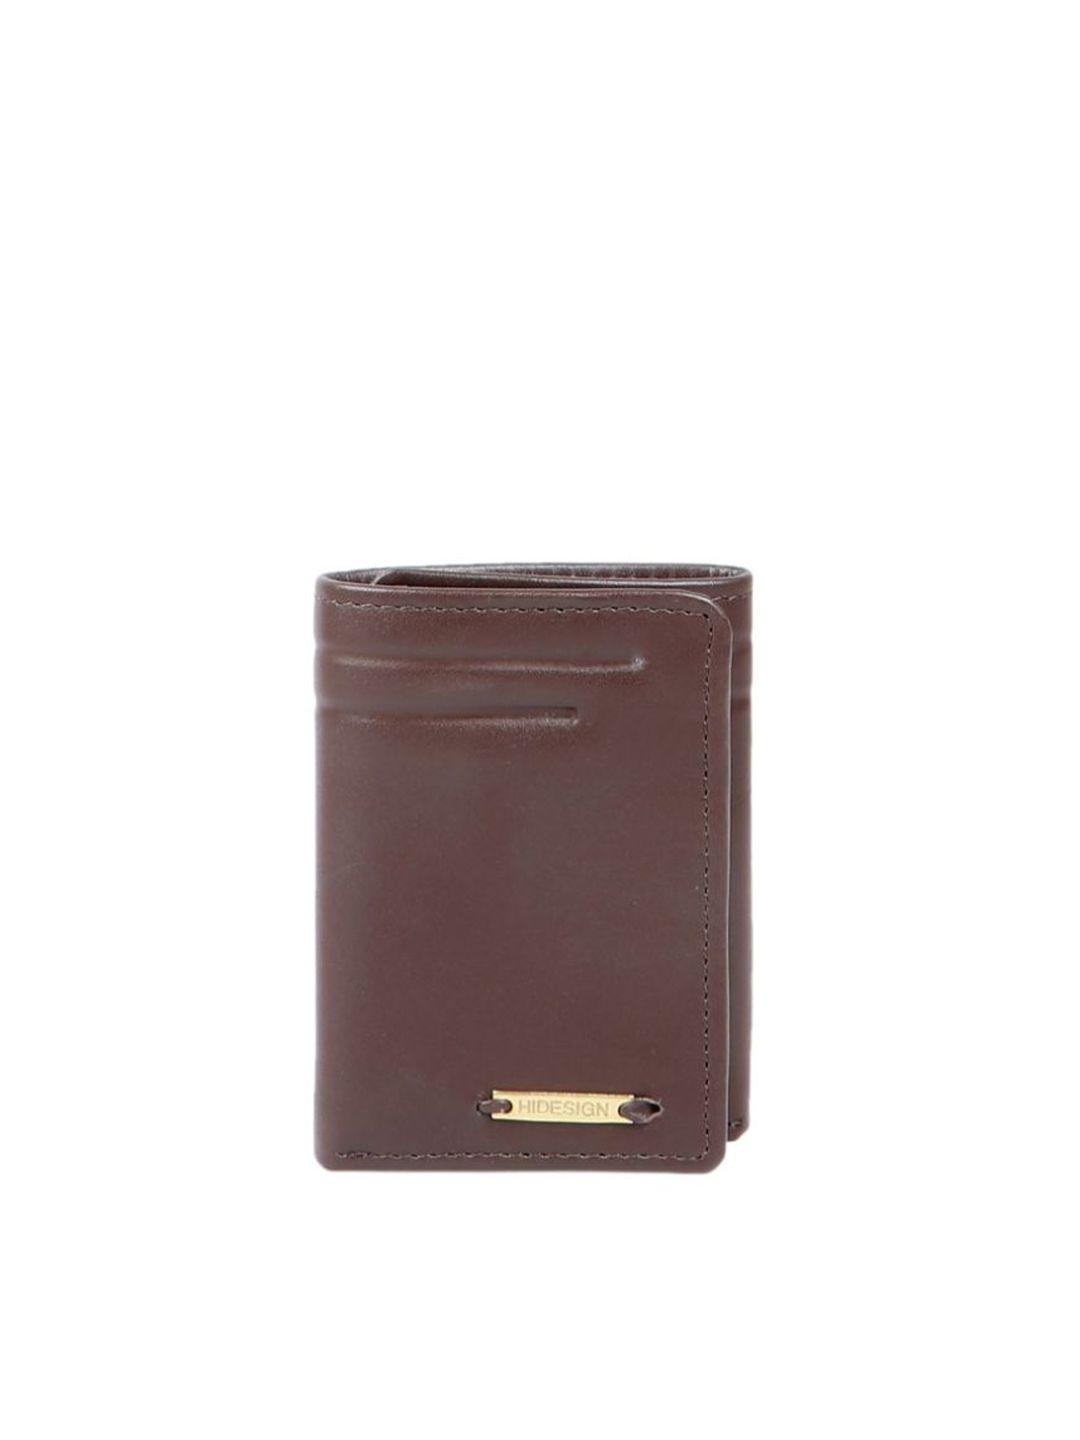 hidesign men brown leather three fold wallet